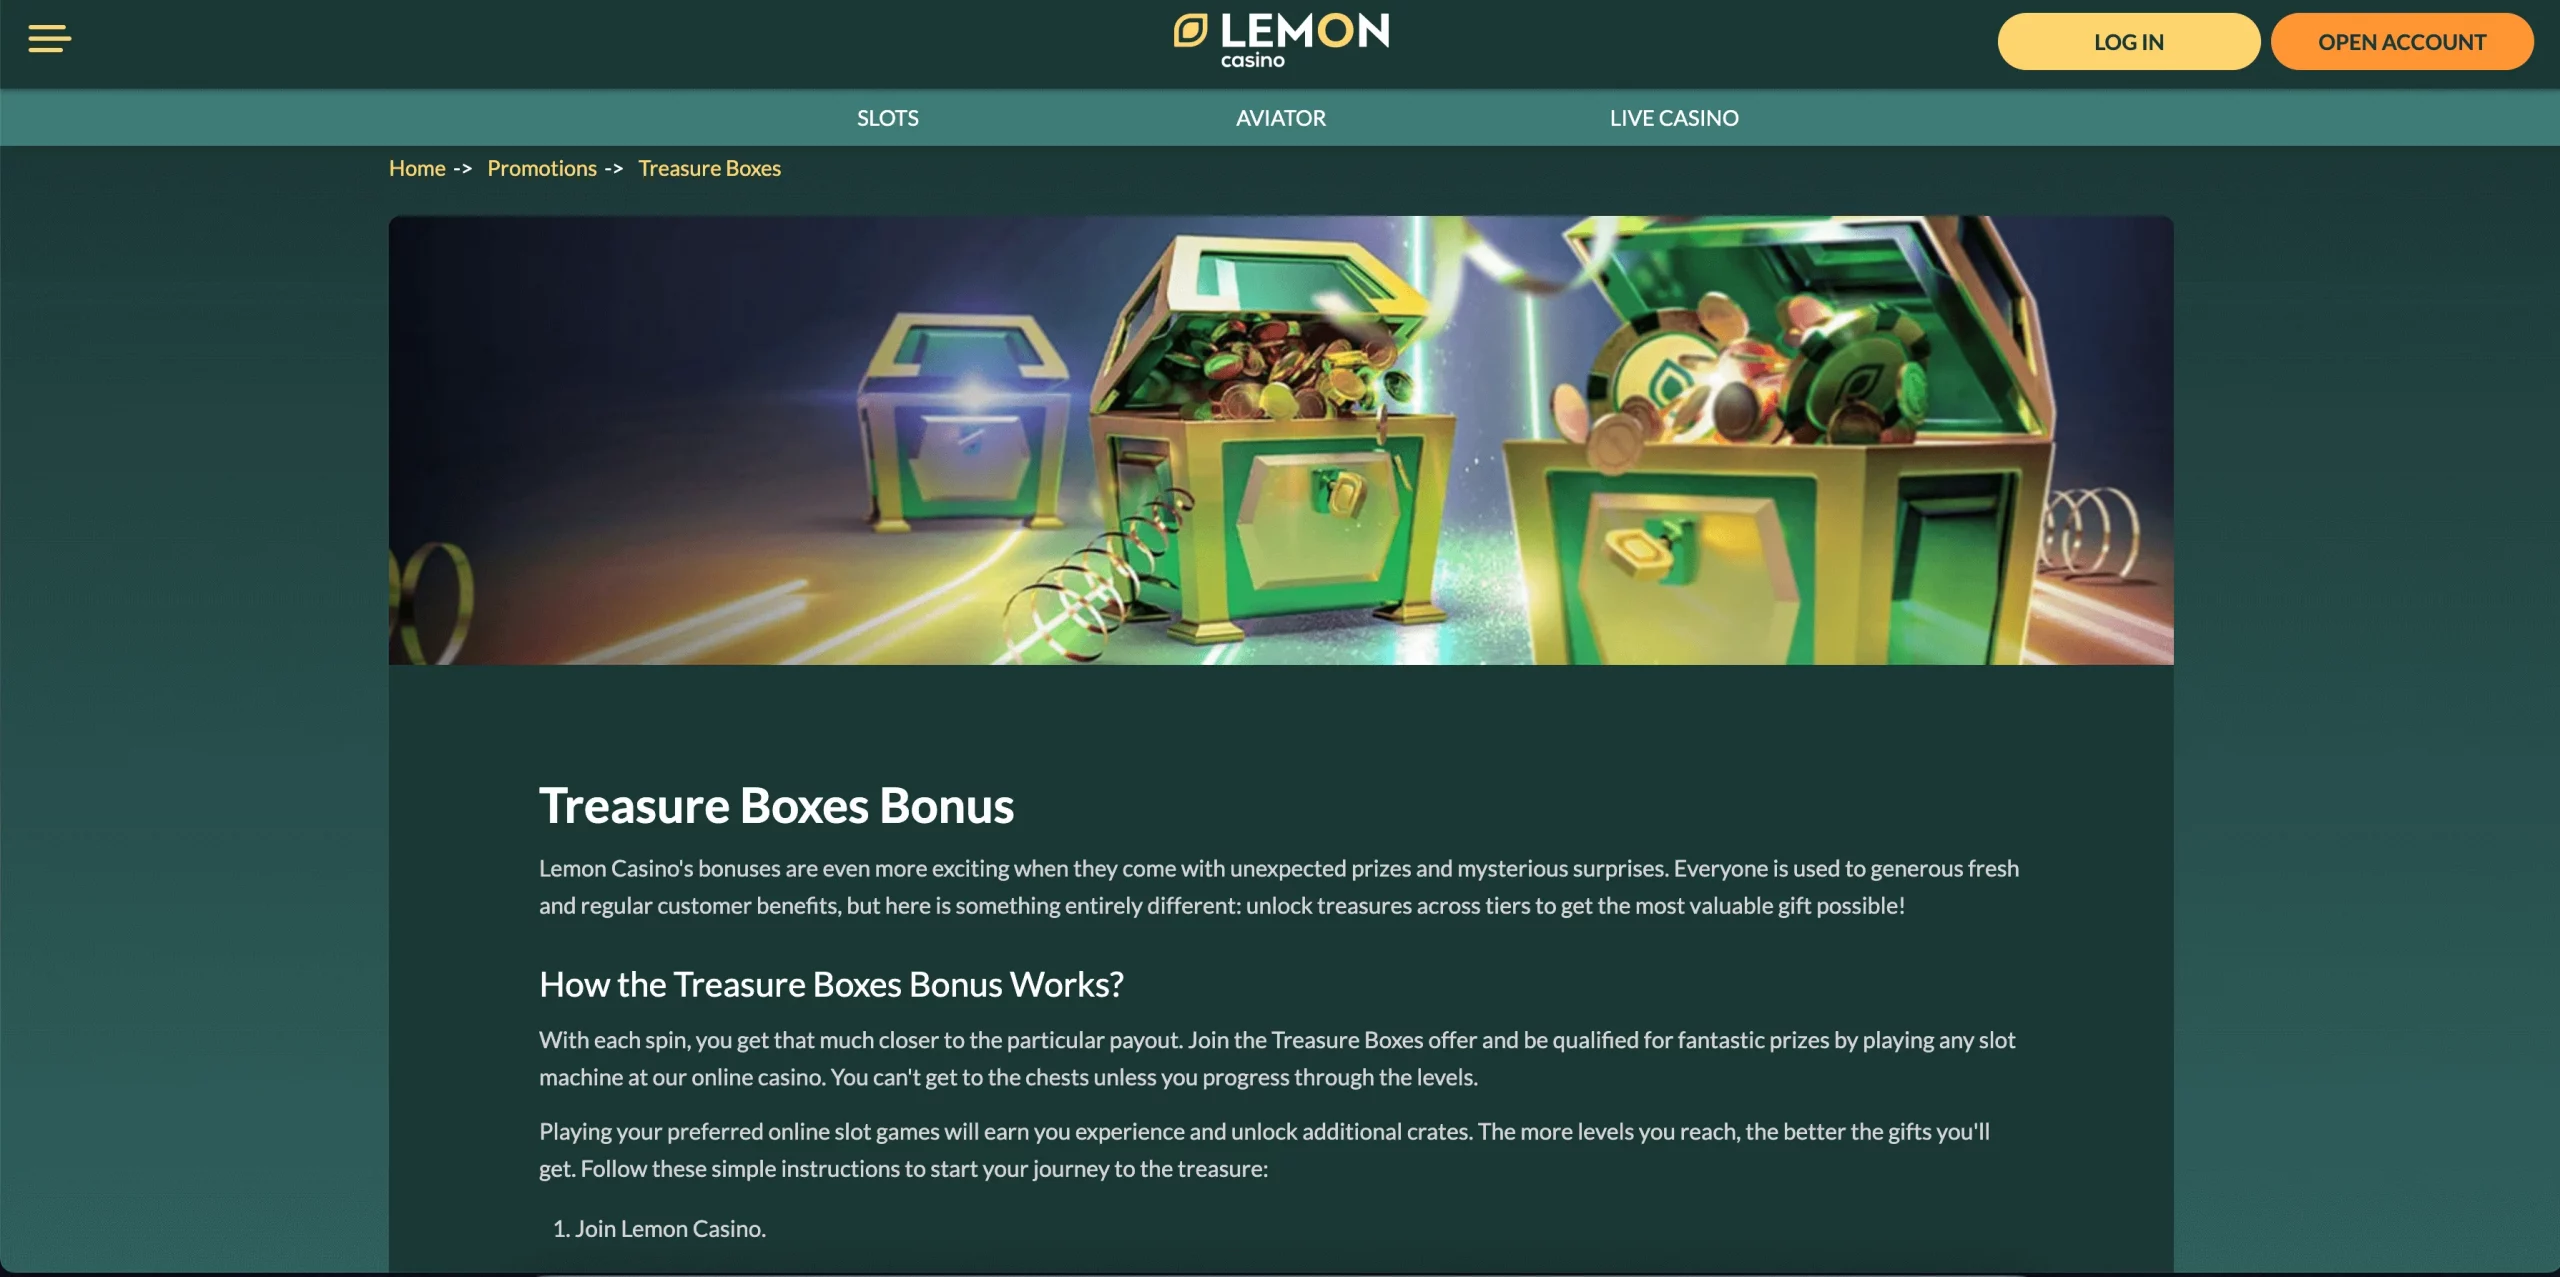 Lemon Casino singapore promotions